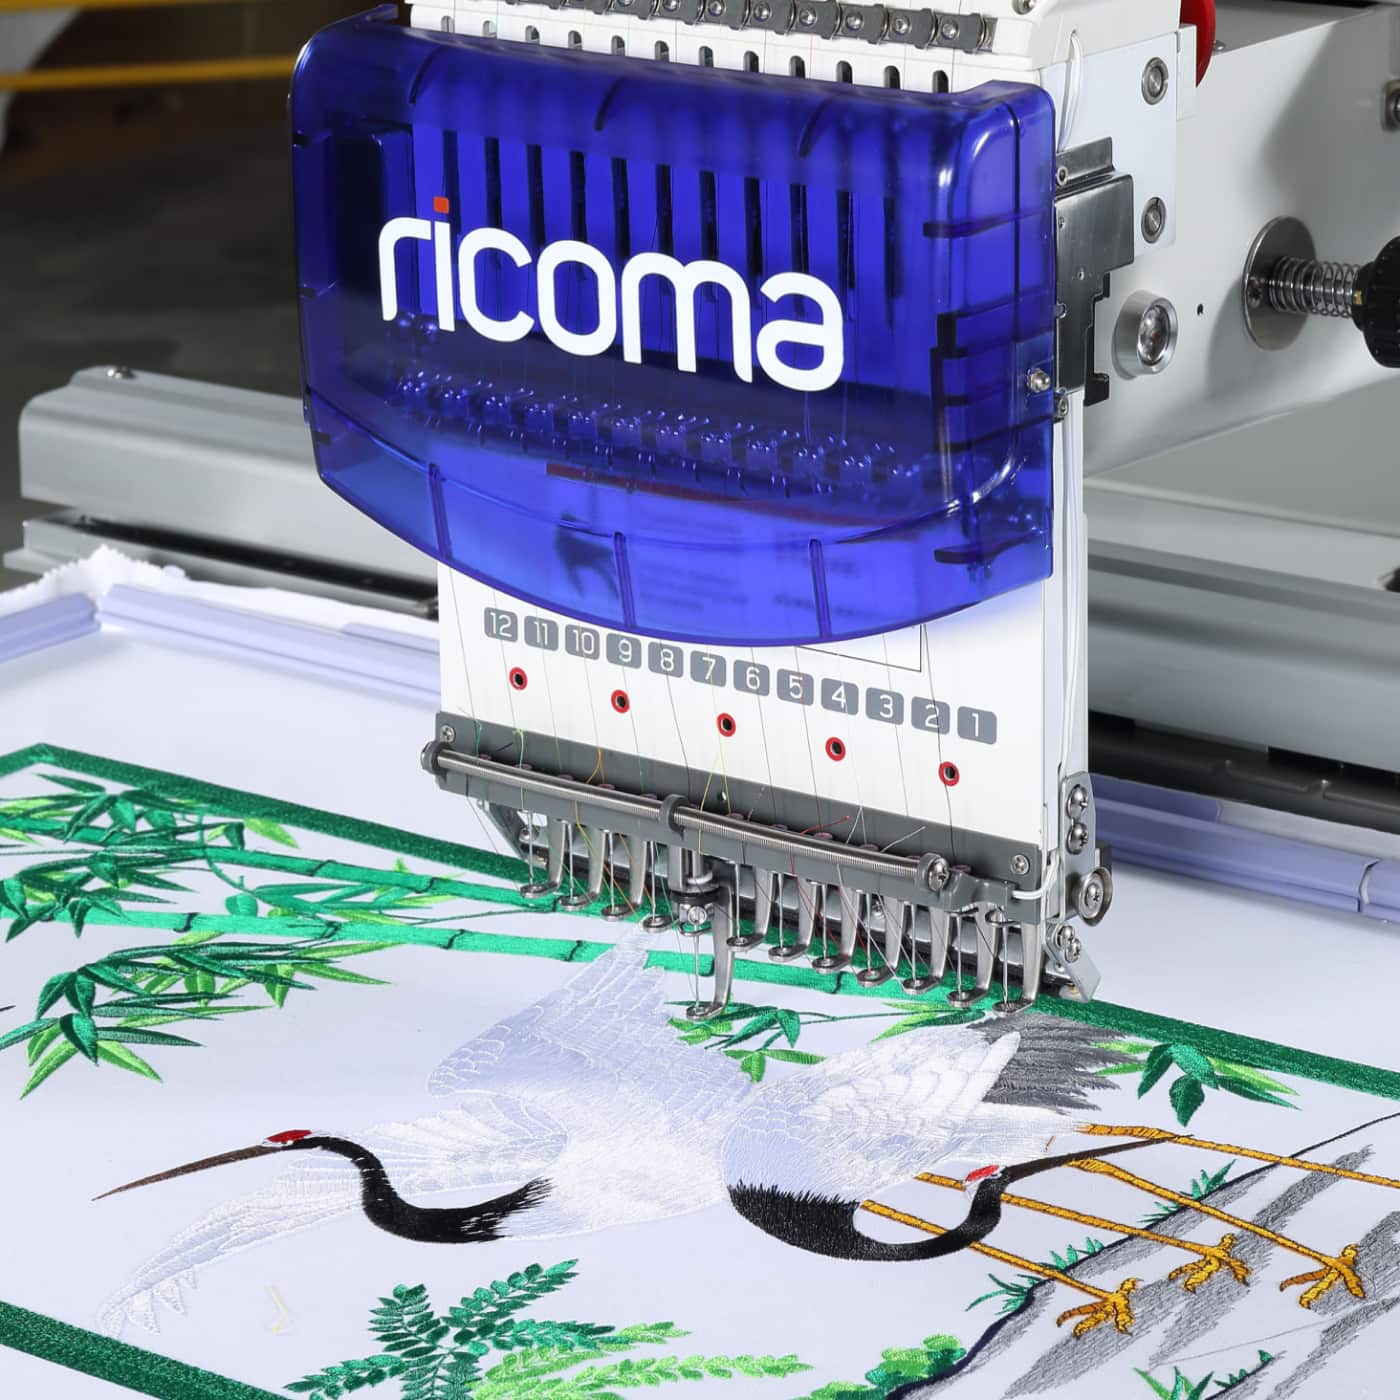 Ricoma Embroidery Machine TC Series, Commercial Single Head